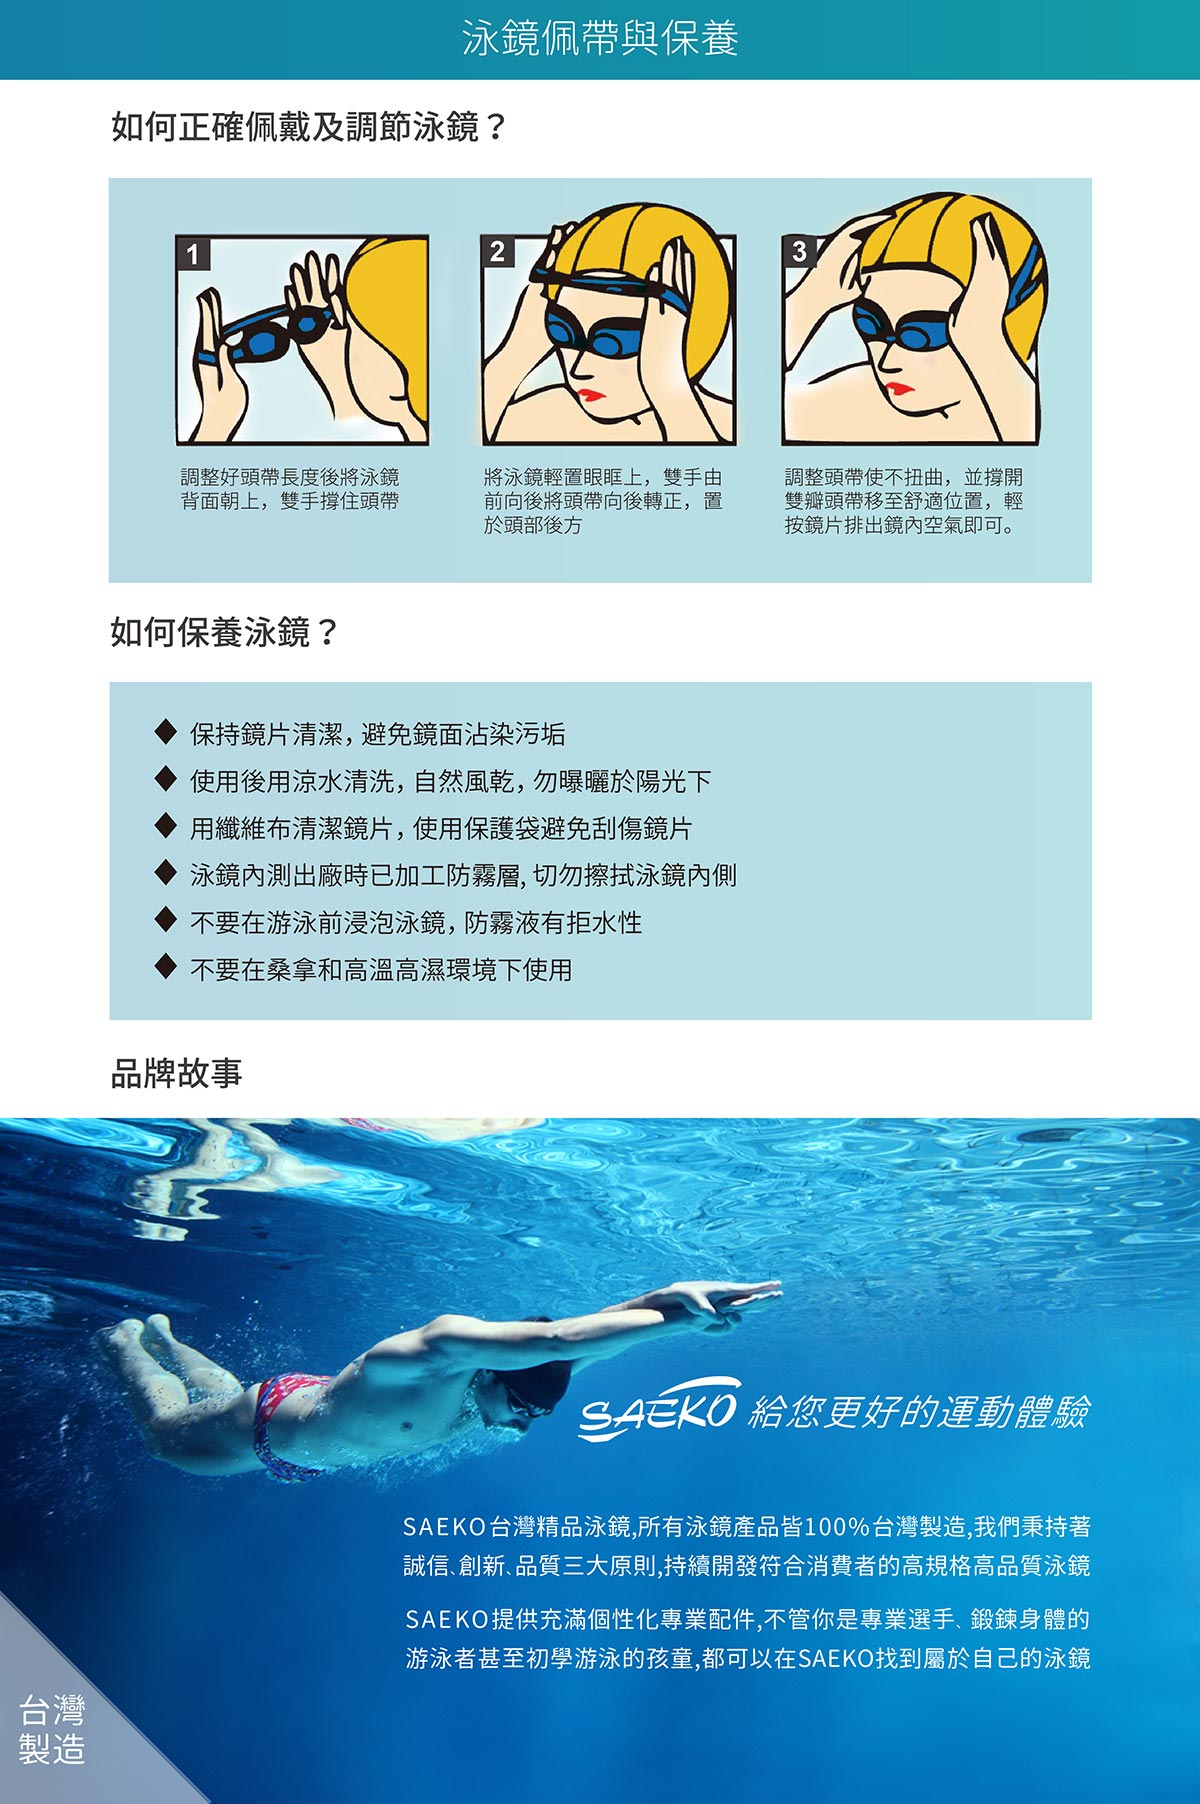 SAEKO 度數泳鏡 -2.0 (200度)，廣角平面度數光學鏡片，台灣製造精品泳鏡，可選度數: -2.0/-3.0/-4.0/-5.0/-6.0，全矽膠眼罩，鼻扣共有三種尺寸，適合各種臉型。